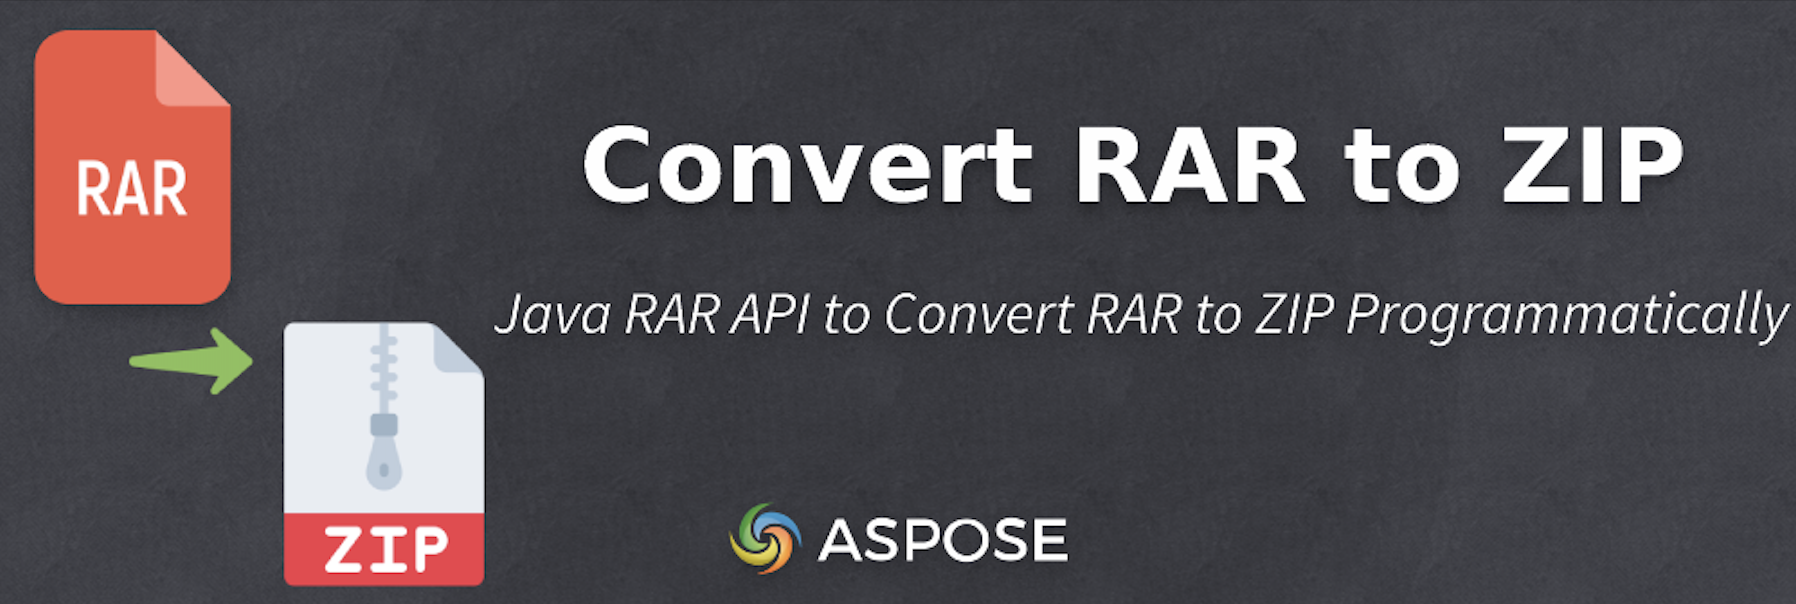 Konvertieren Sie RAR in ZIP in Java - Java RAR API